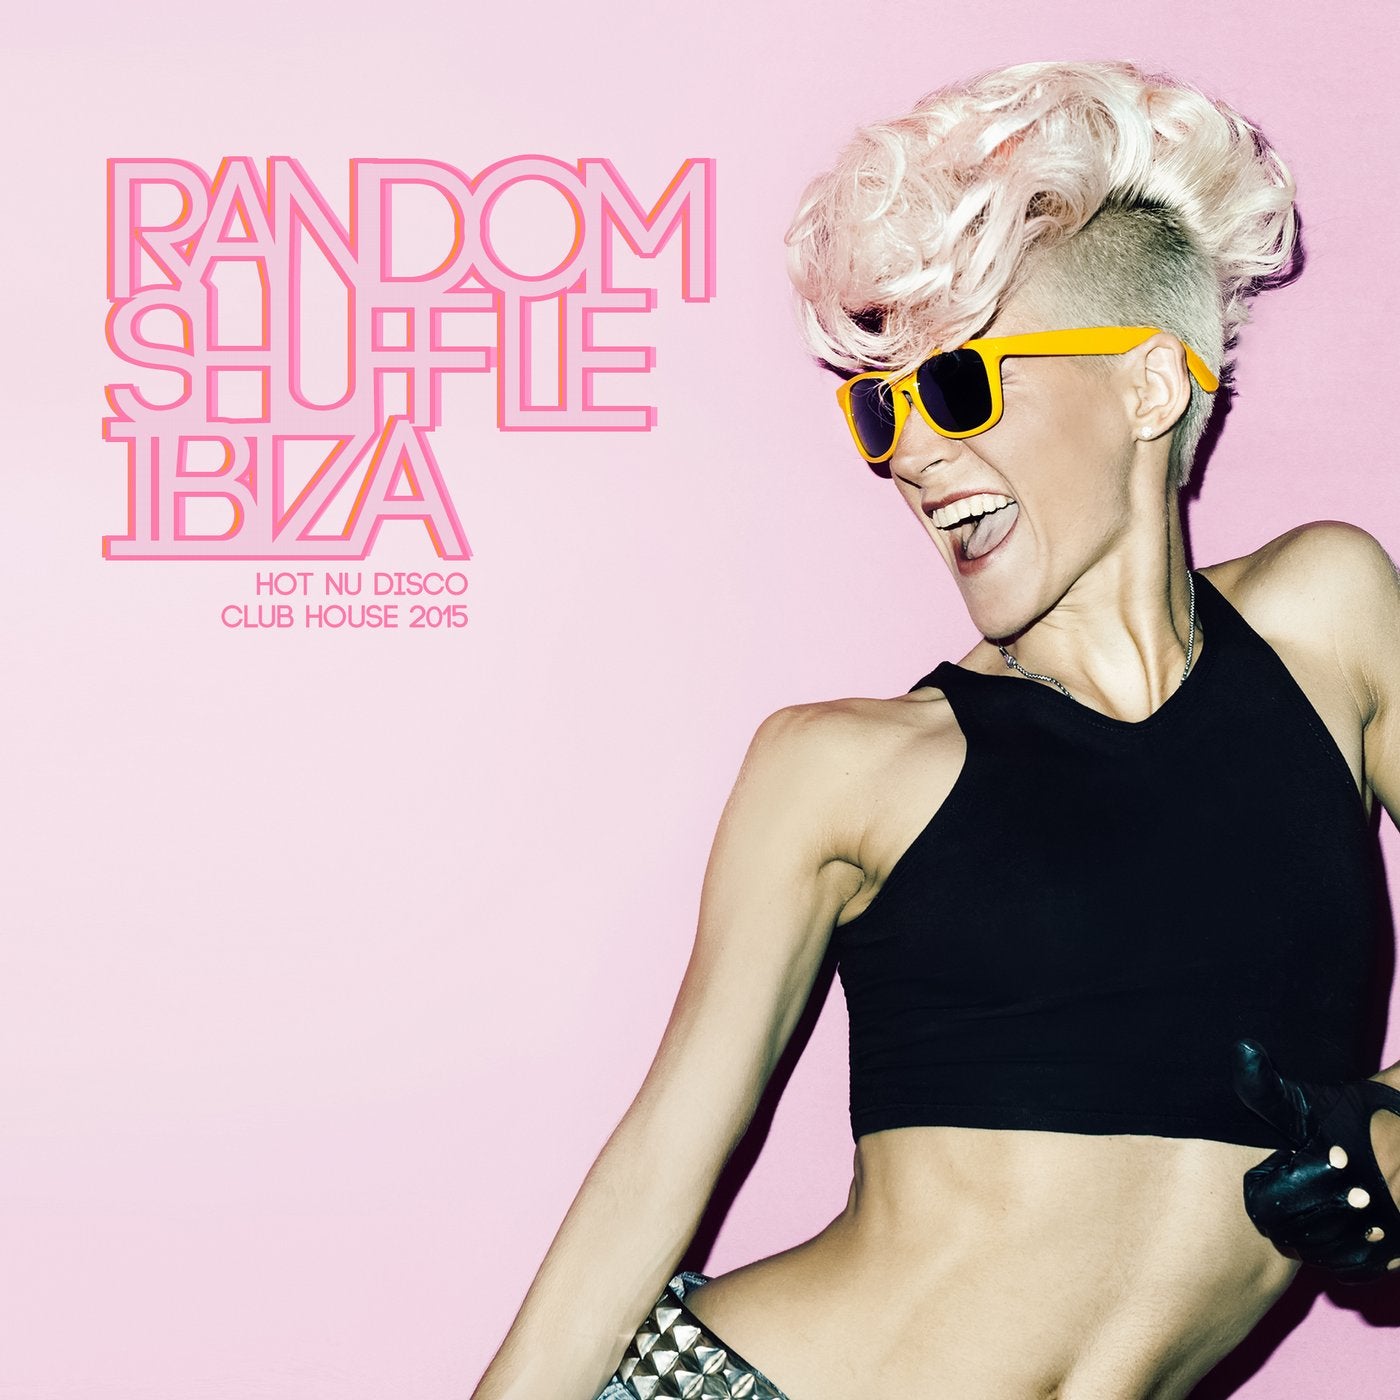 Random Shuffle Ibiza - Hot Nu Disco Club House 2015